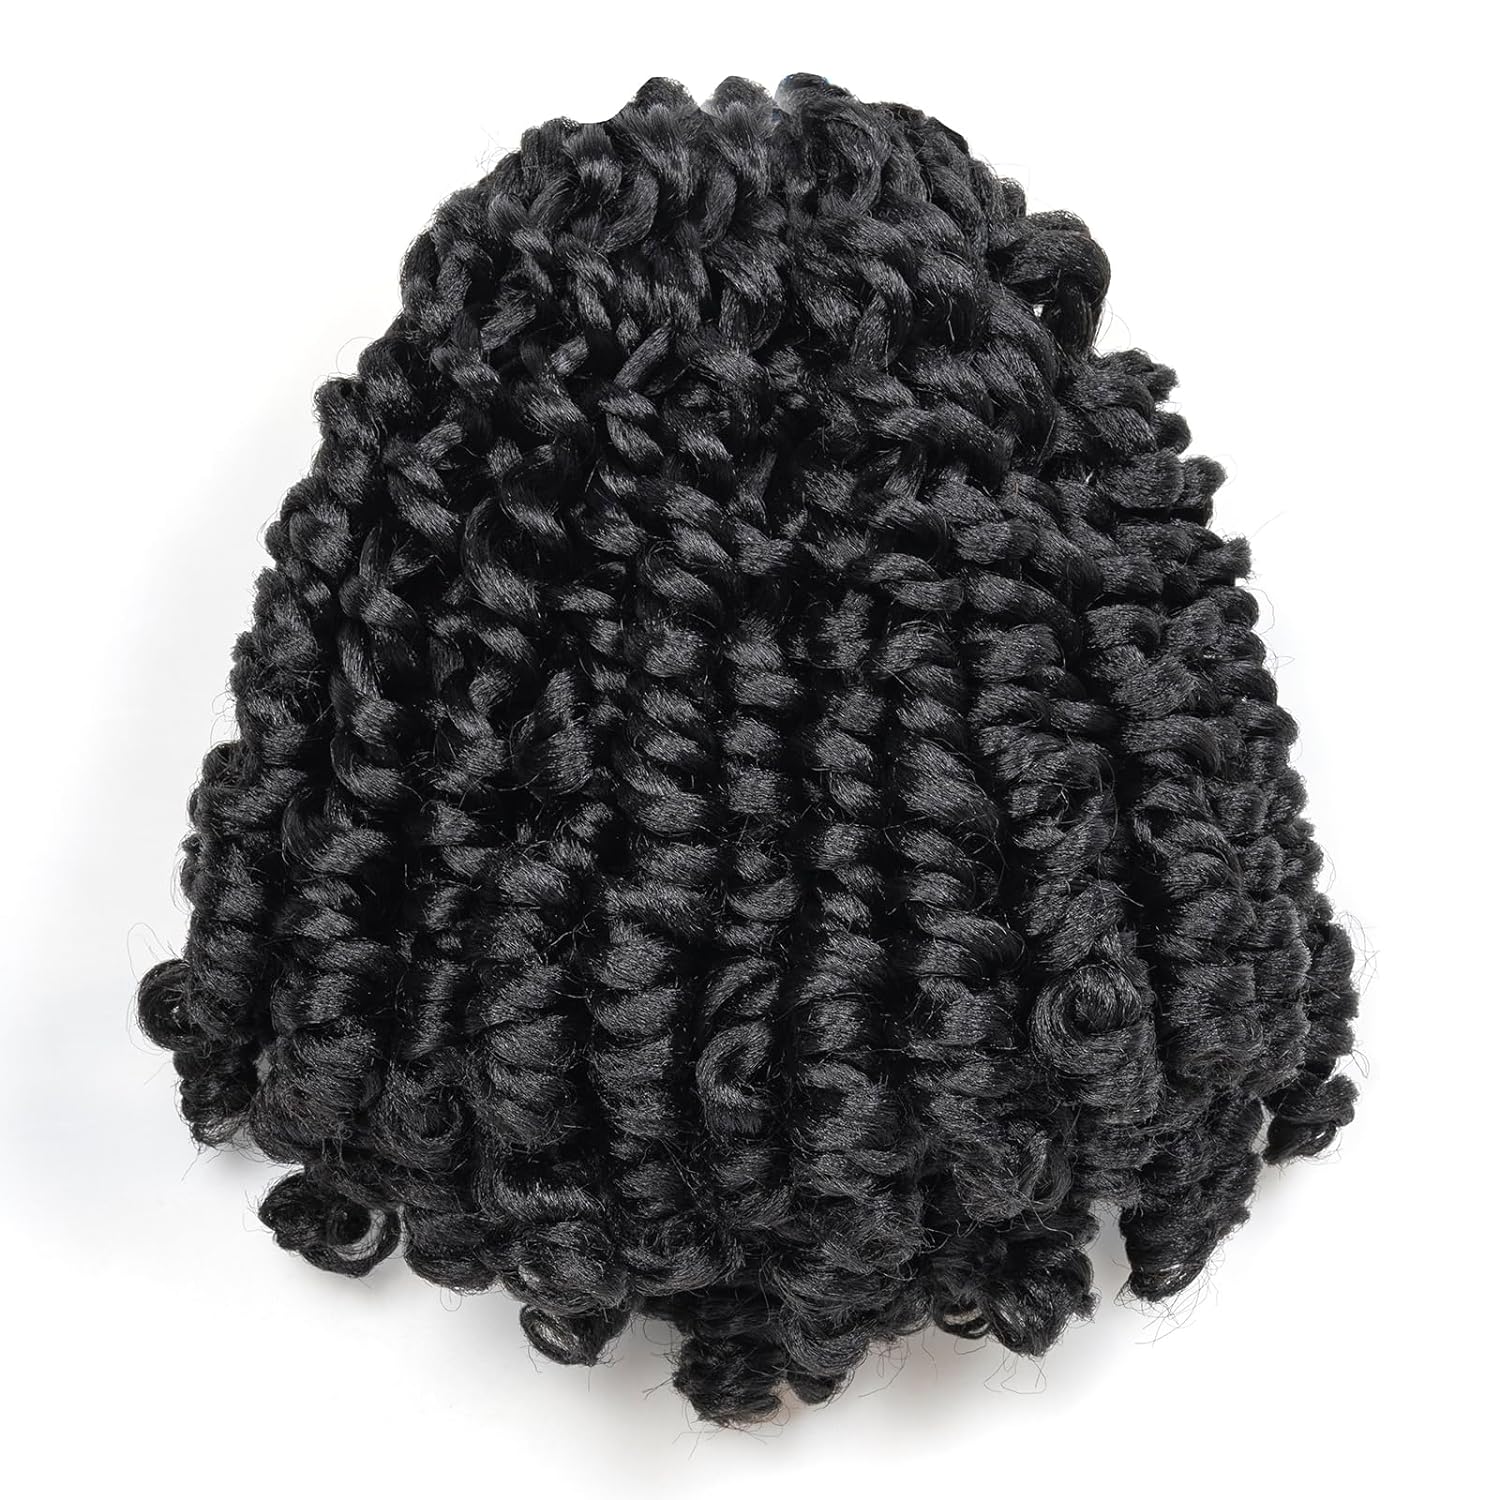 FAST SHIPPING 3-5 DAY WC | Toyotress Wand Curl Crochet Hair - 6 Packs Jet Black Jamaican Bounce Crochet Hair, Short Bob Curly Crochet Braids Bouncy Curls Synthetic Braiding Hair Extensions